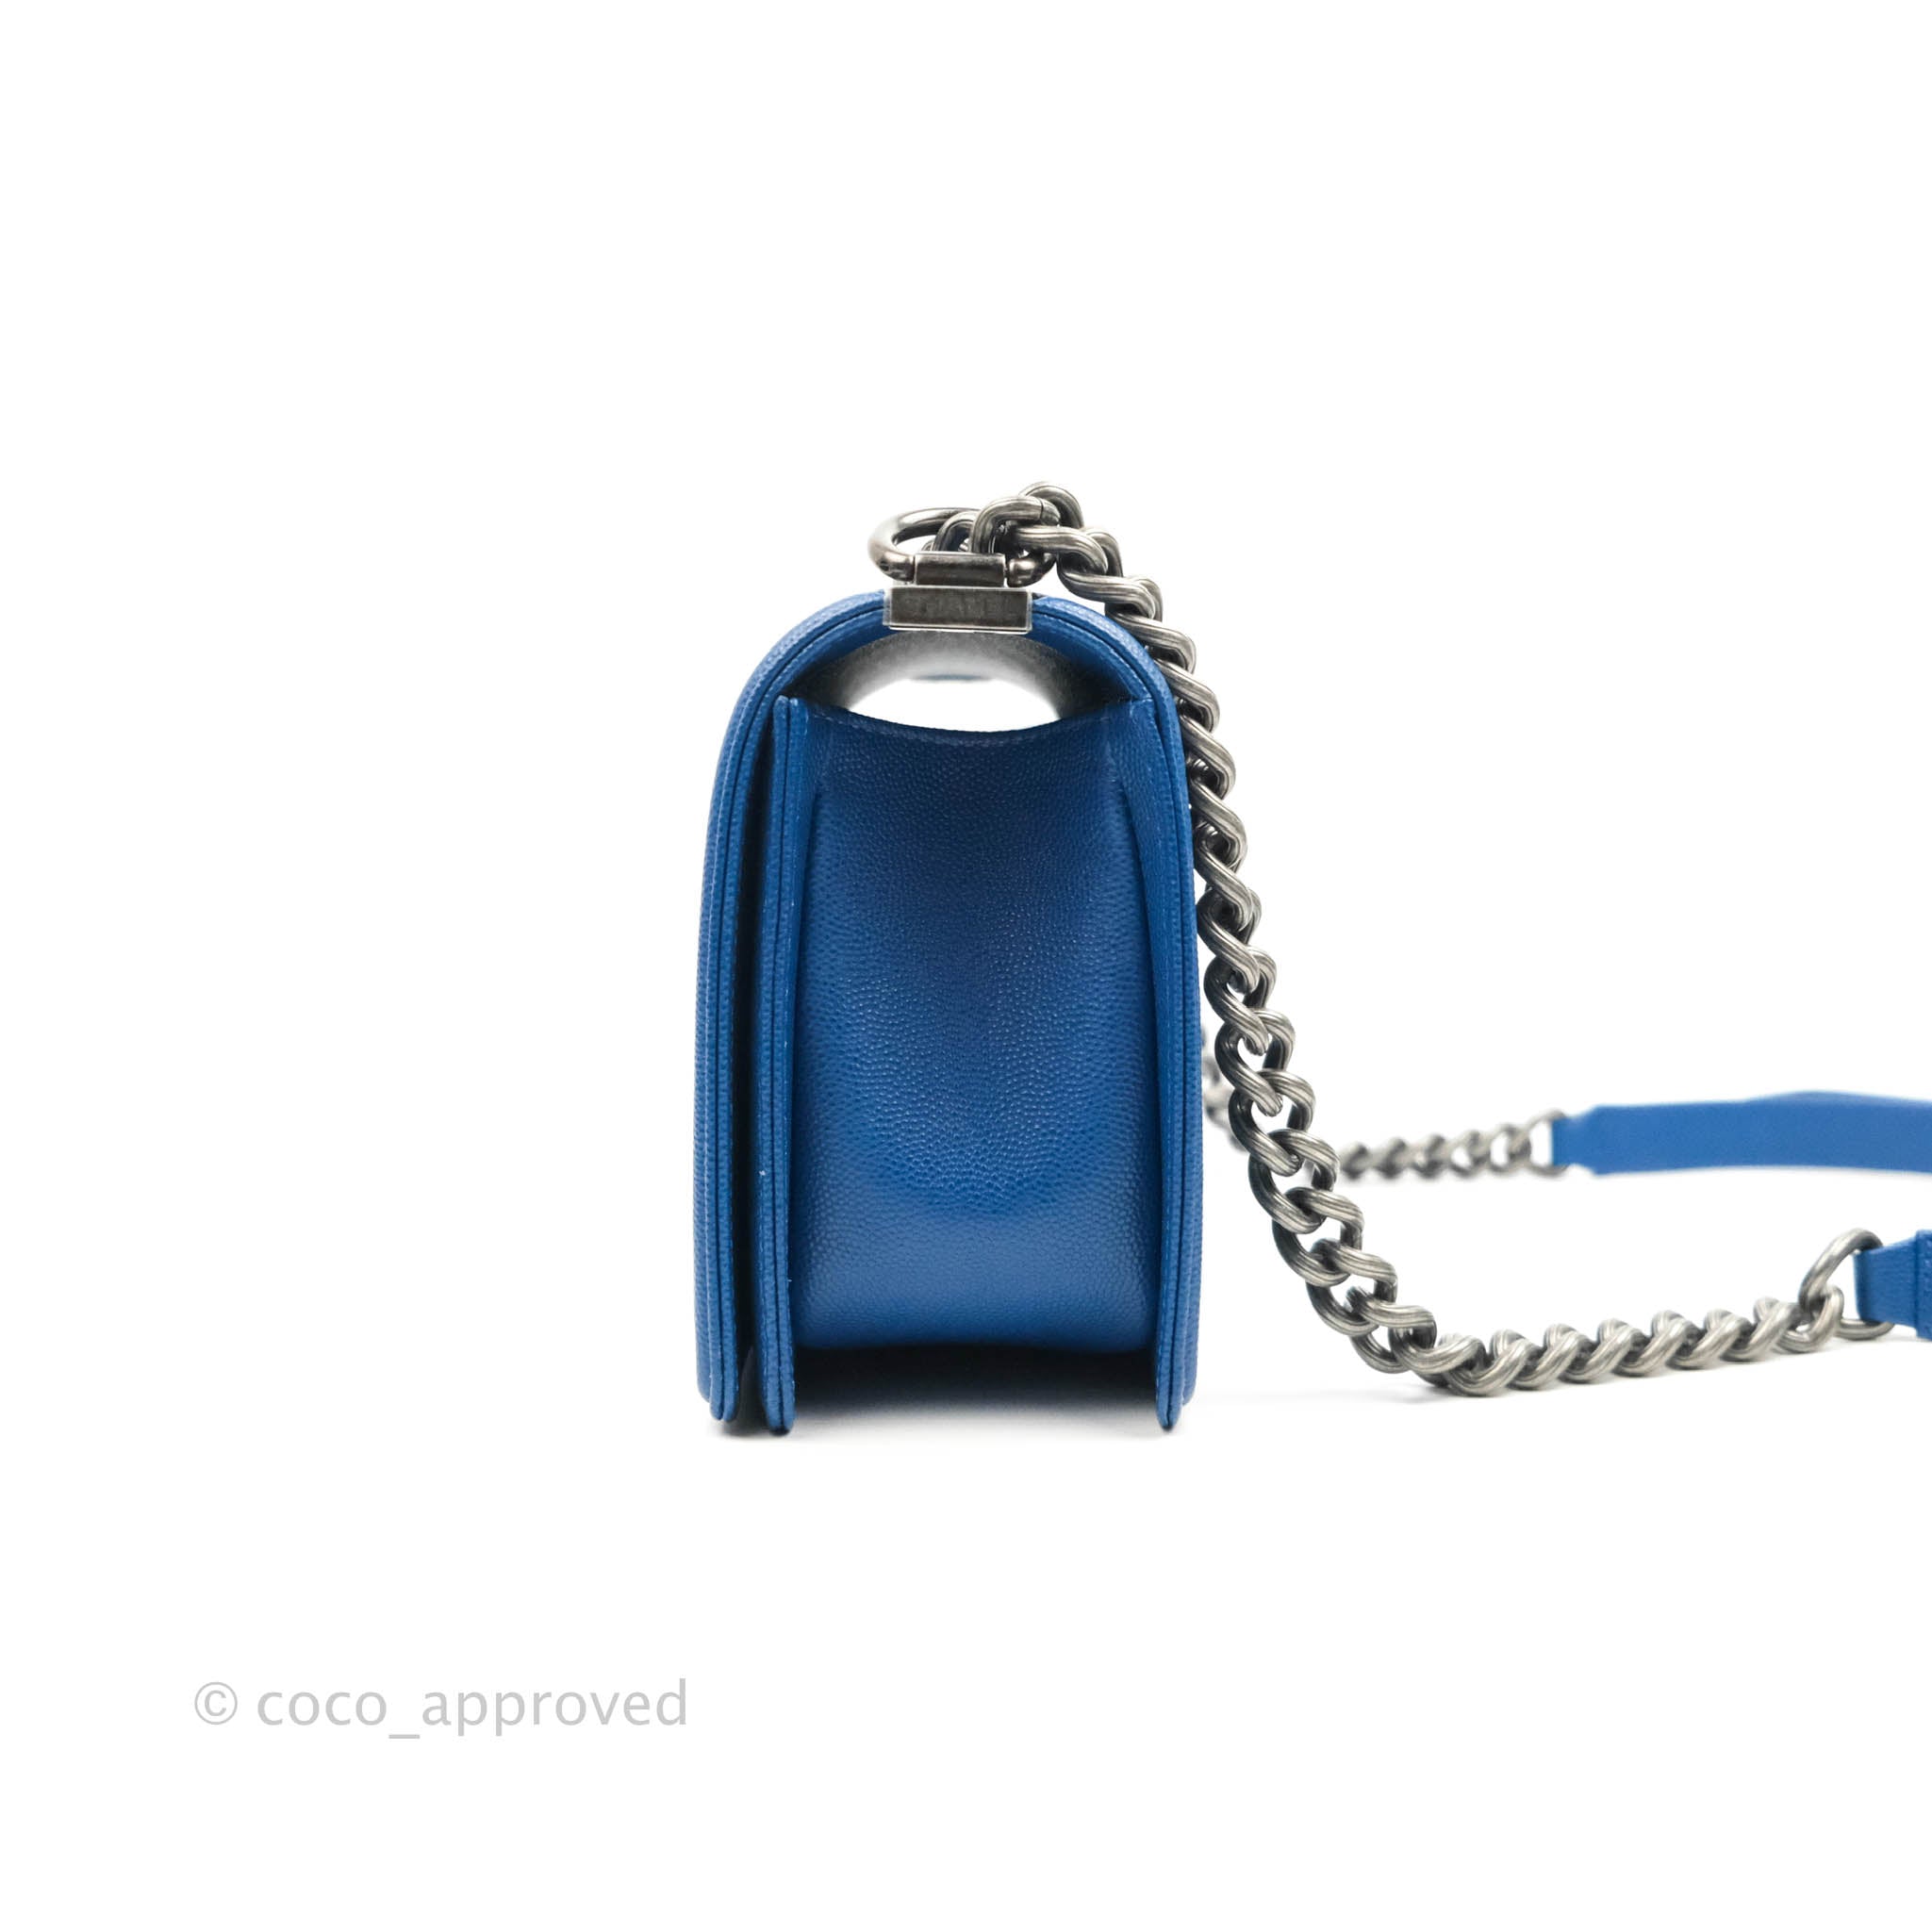 At Auction: CHANEL - Quilted Leather Medium Single Flap Blue / Ruthenium  Shoulder Bag